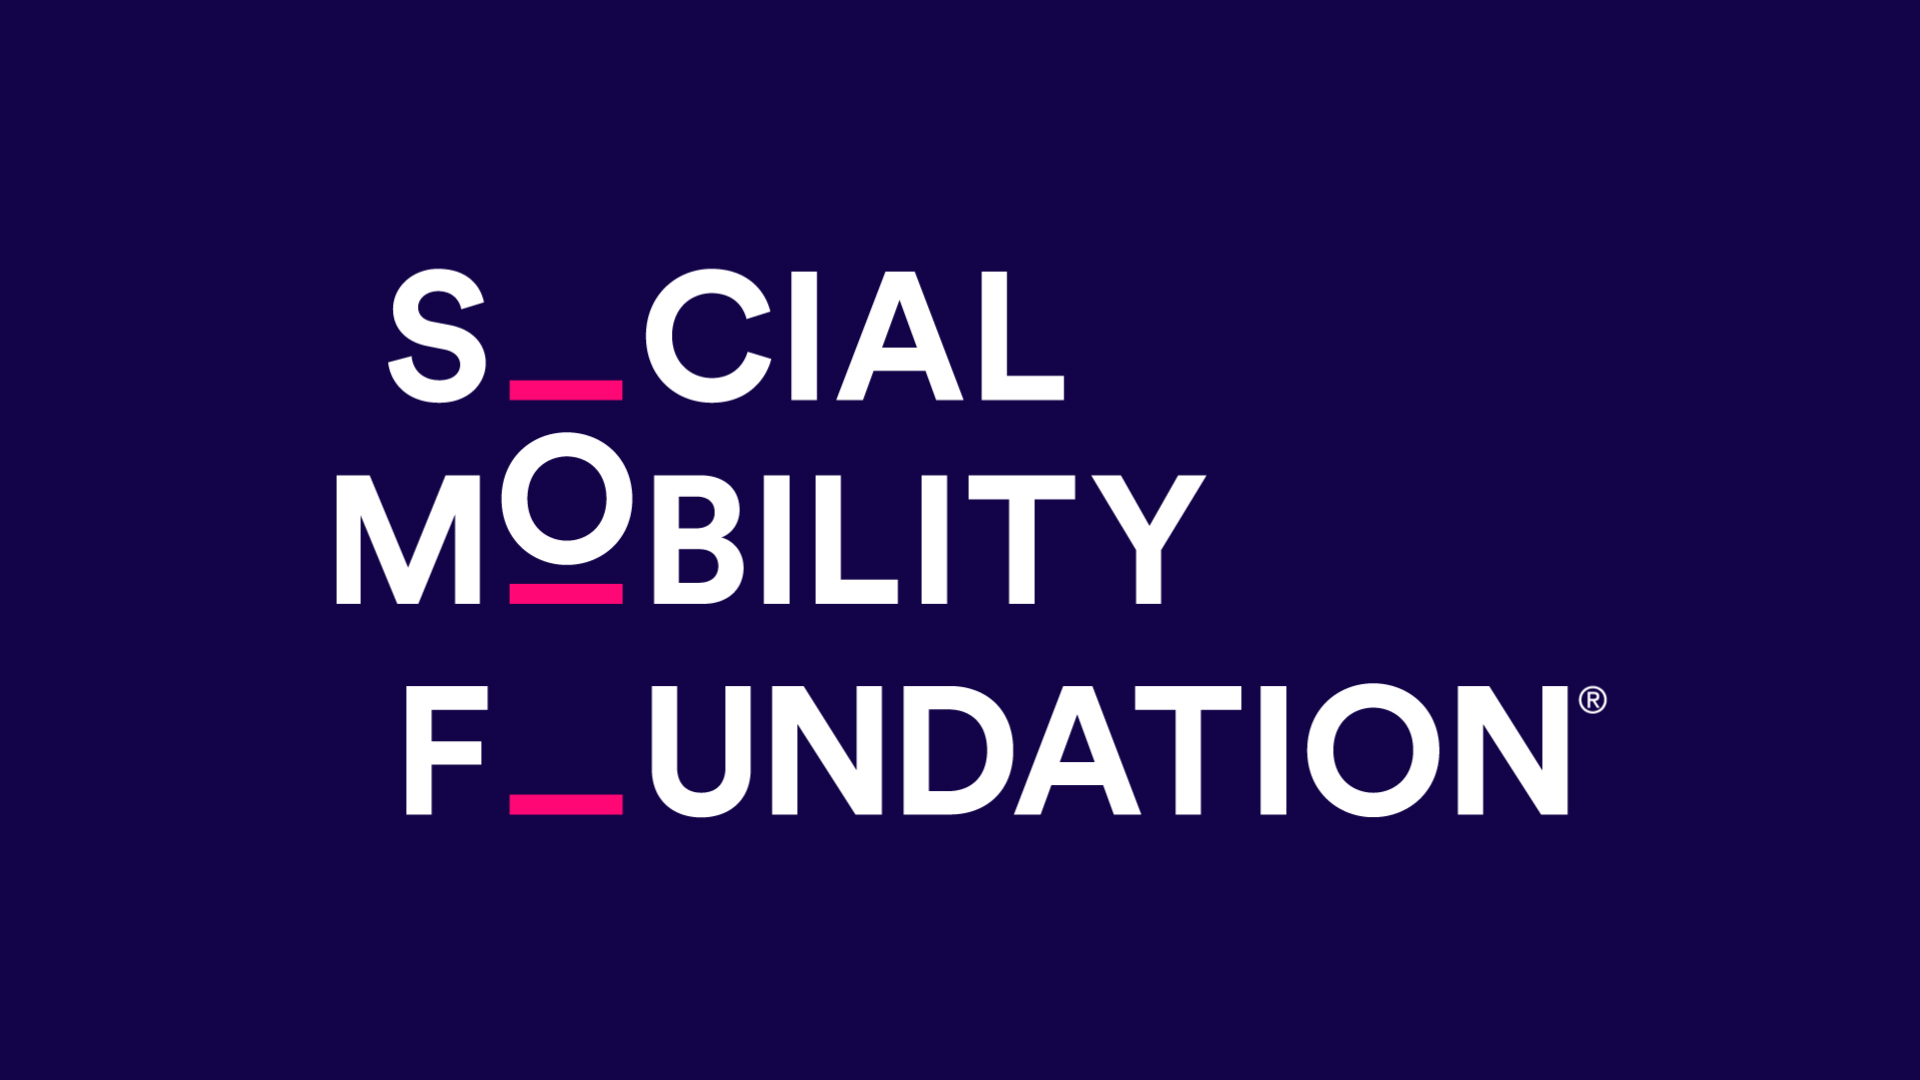 Social Mobility Foundation